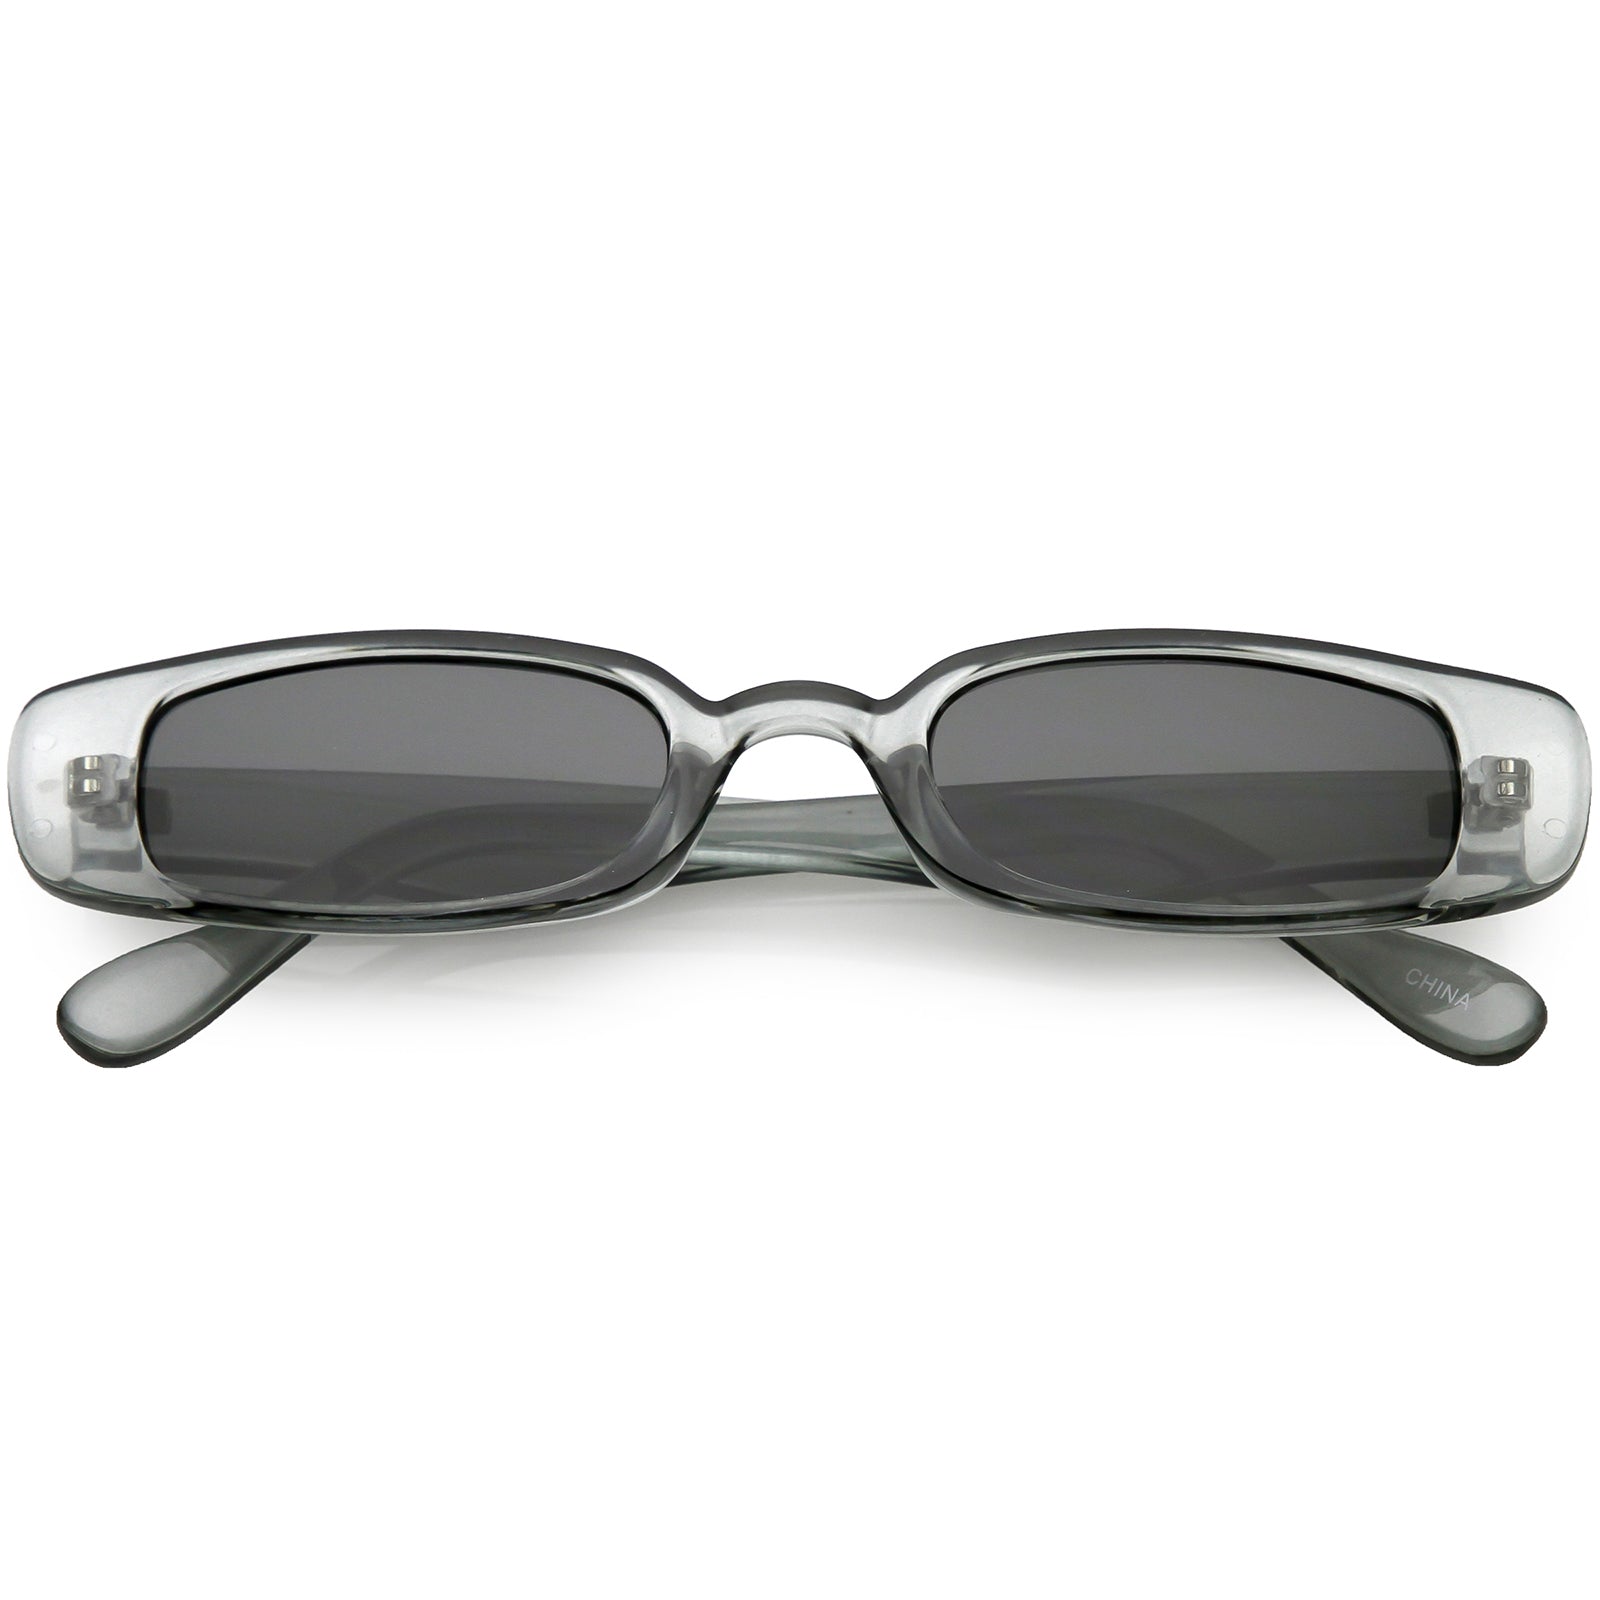 Sunglass LA Extreme Thin Small Rectangle Sunglasses